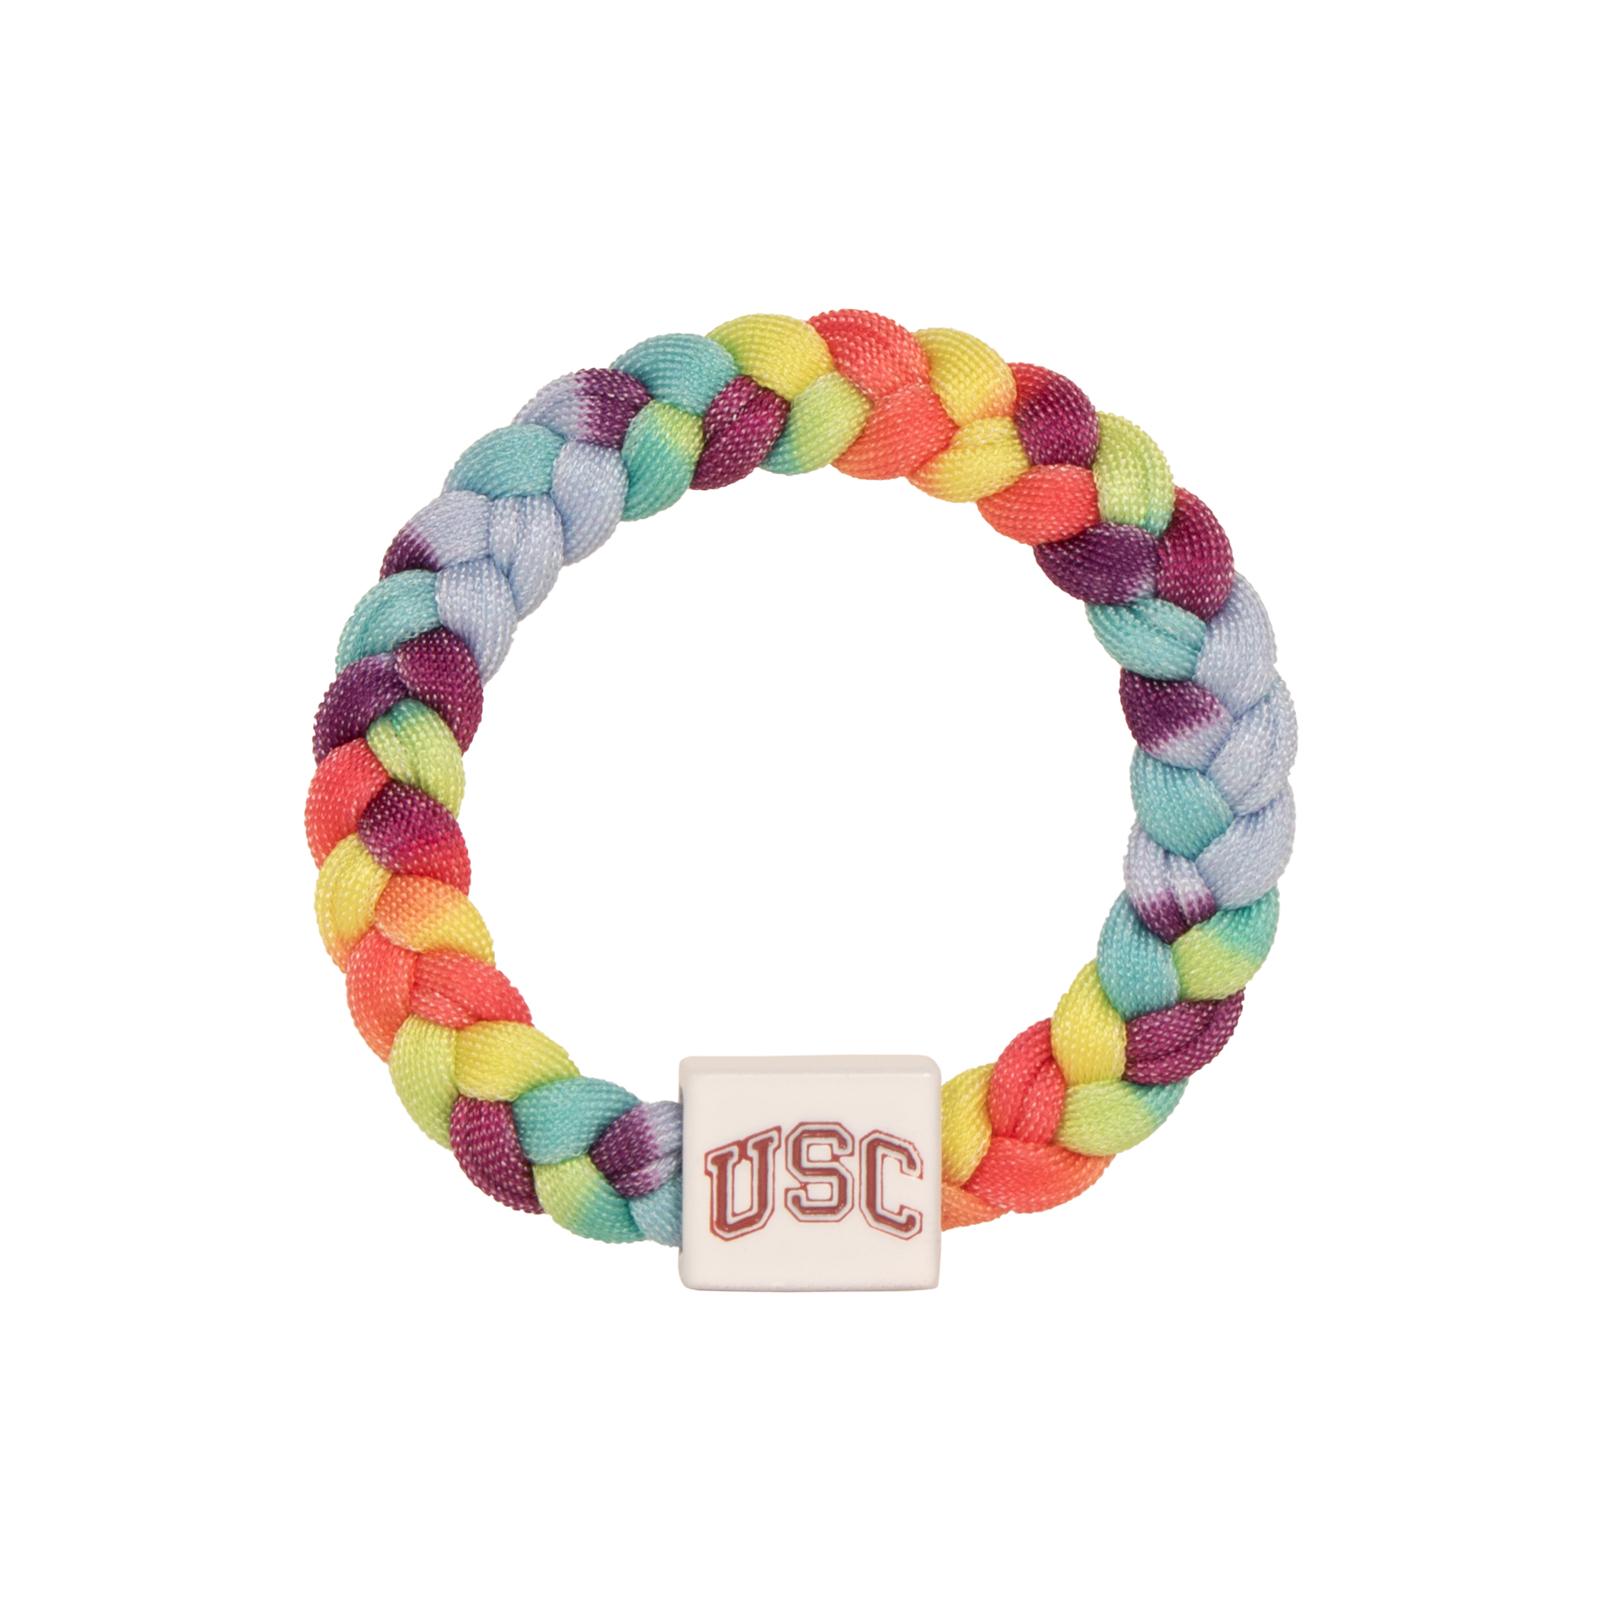 USC Arch Braided Bracelet Rainbow Pin USA image01